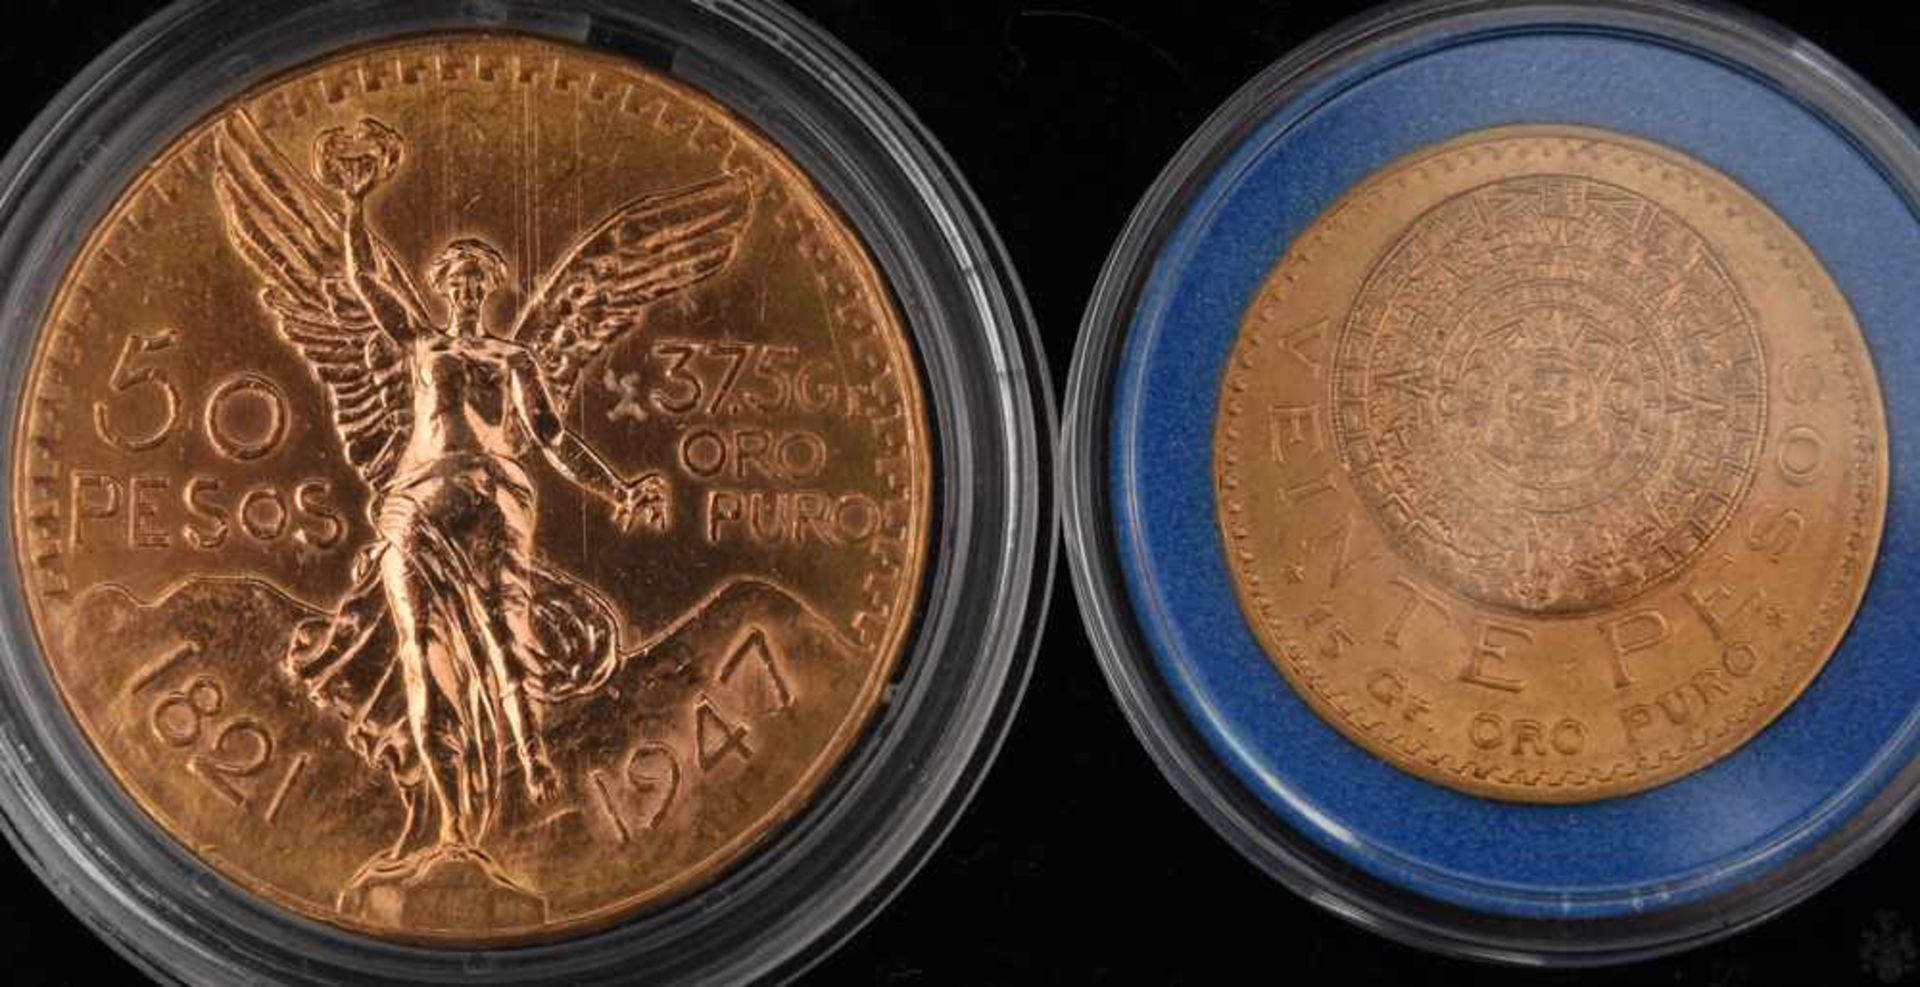 GOLDMÜNZEN, Konvolut Mexico Pesos Gold, 20. Jhd. (11)7 Münzen Mexico1 x 50 Pesos Centenario 41,667 - Bild 2 aus 9